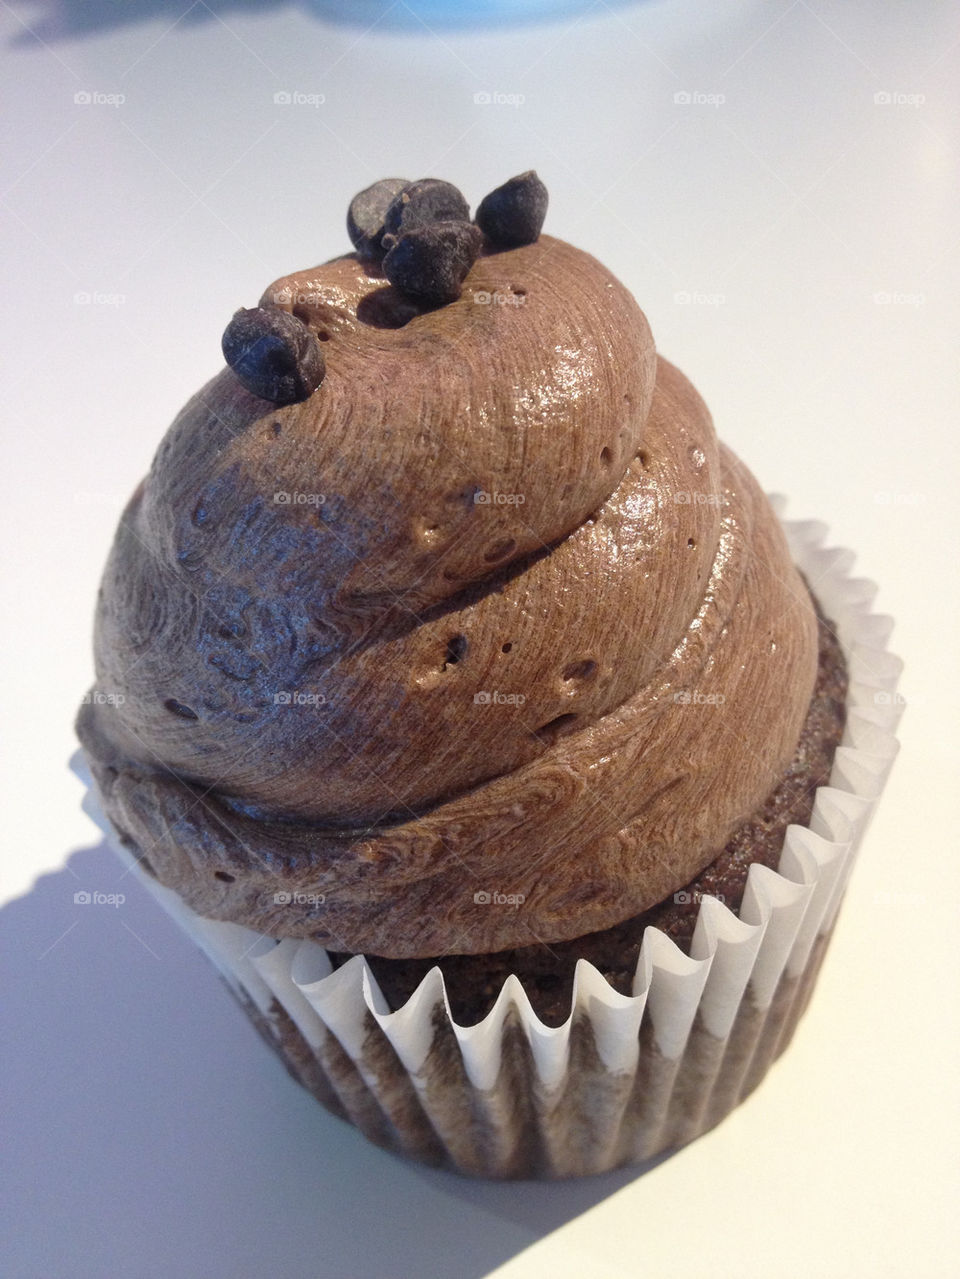 sweet moose chocolate cupcake by fotocapsule